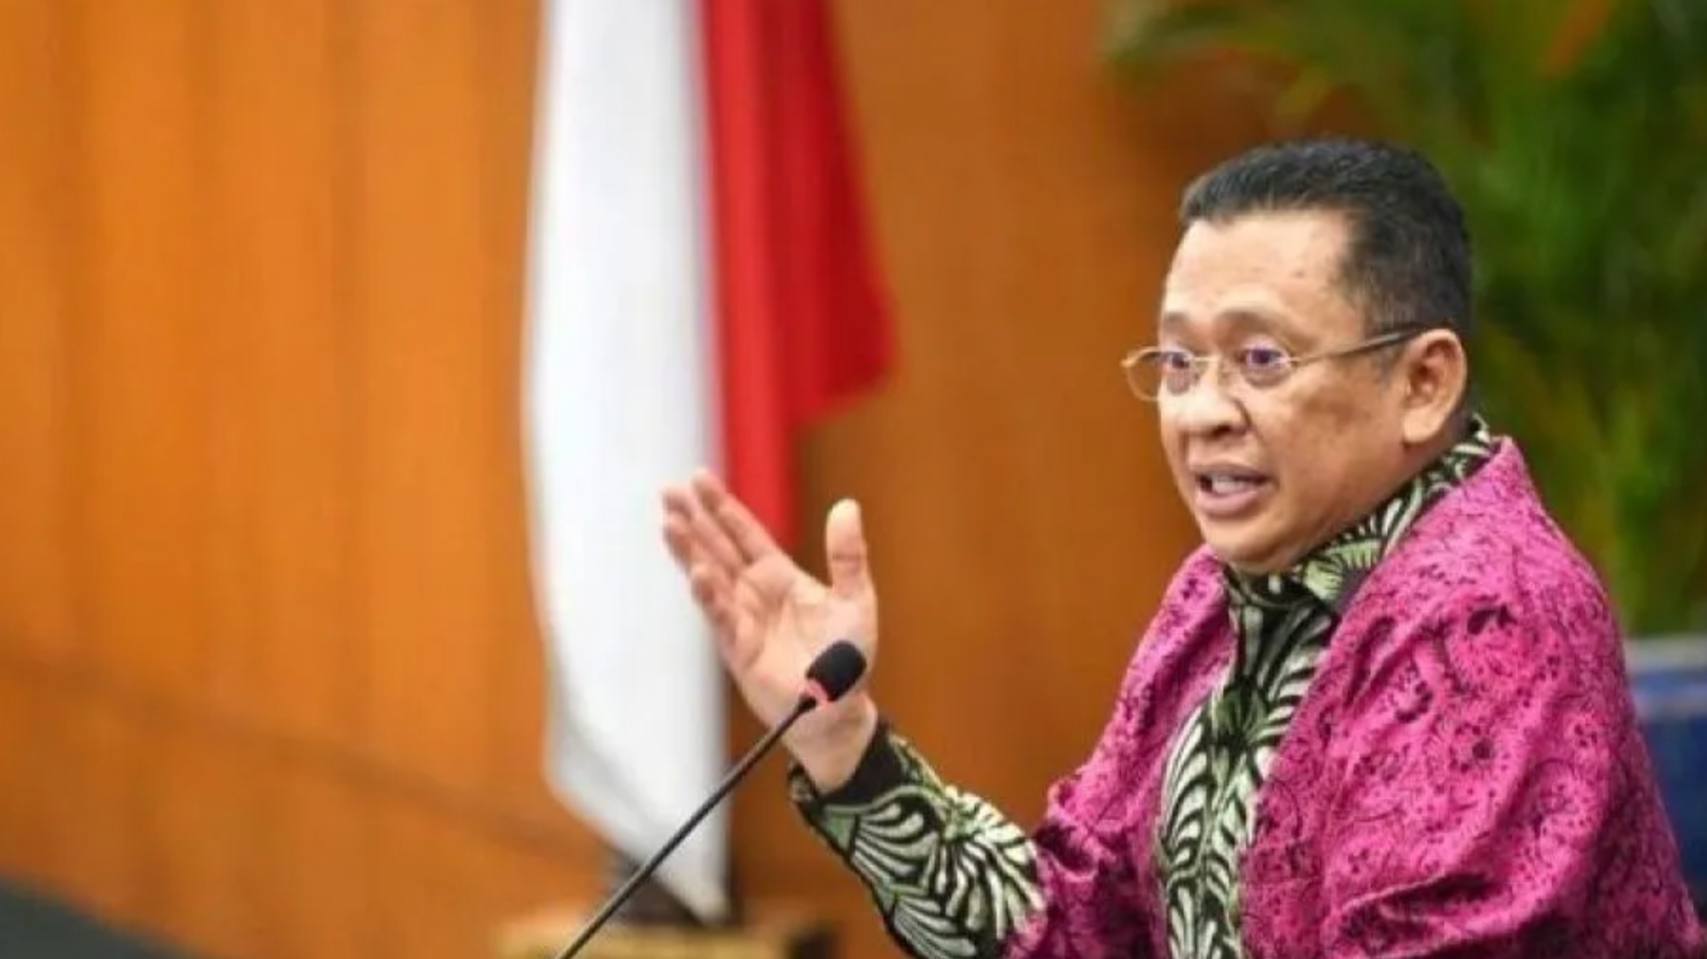 Ketua MPR Bambang Soesatyo Perintahkan Usut Peretas Akun YouTube DPR RI